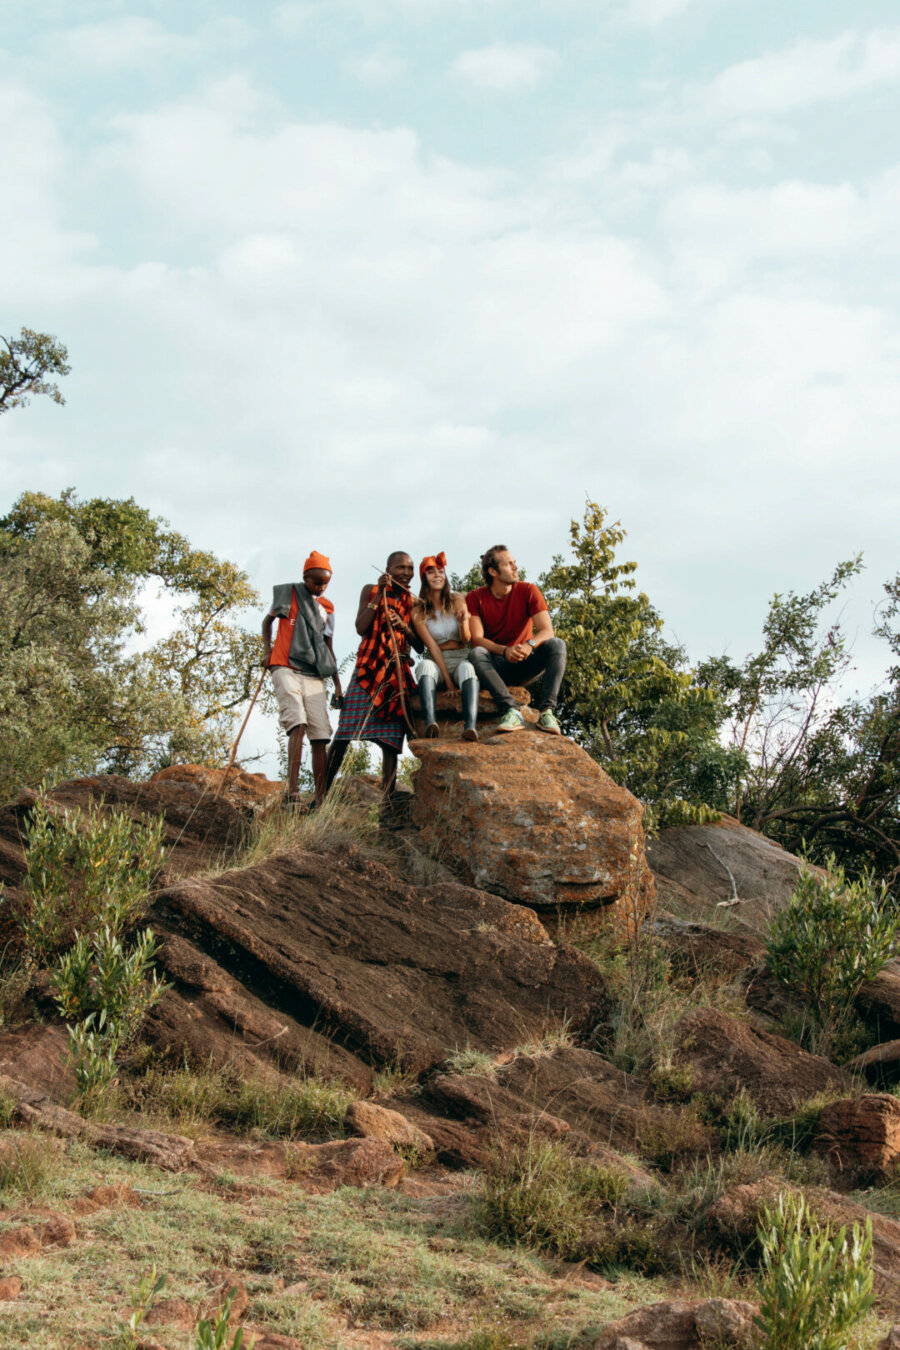 Pili, Dano and Masai kids on a hike